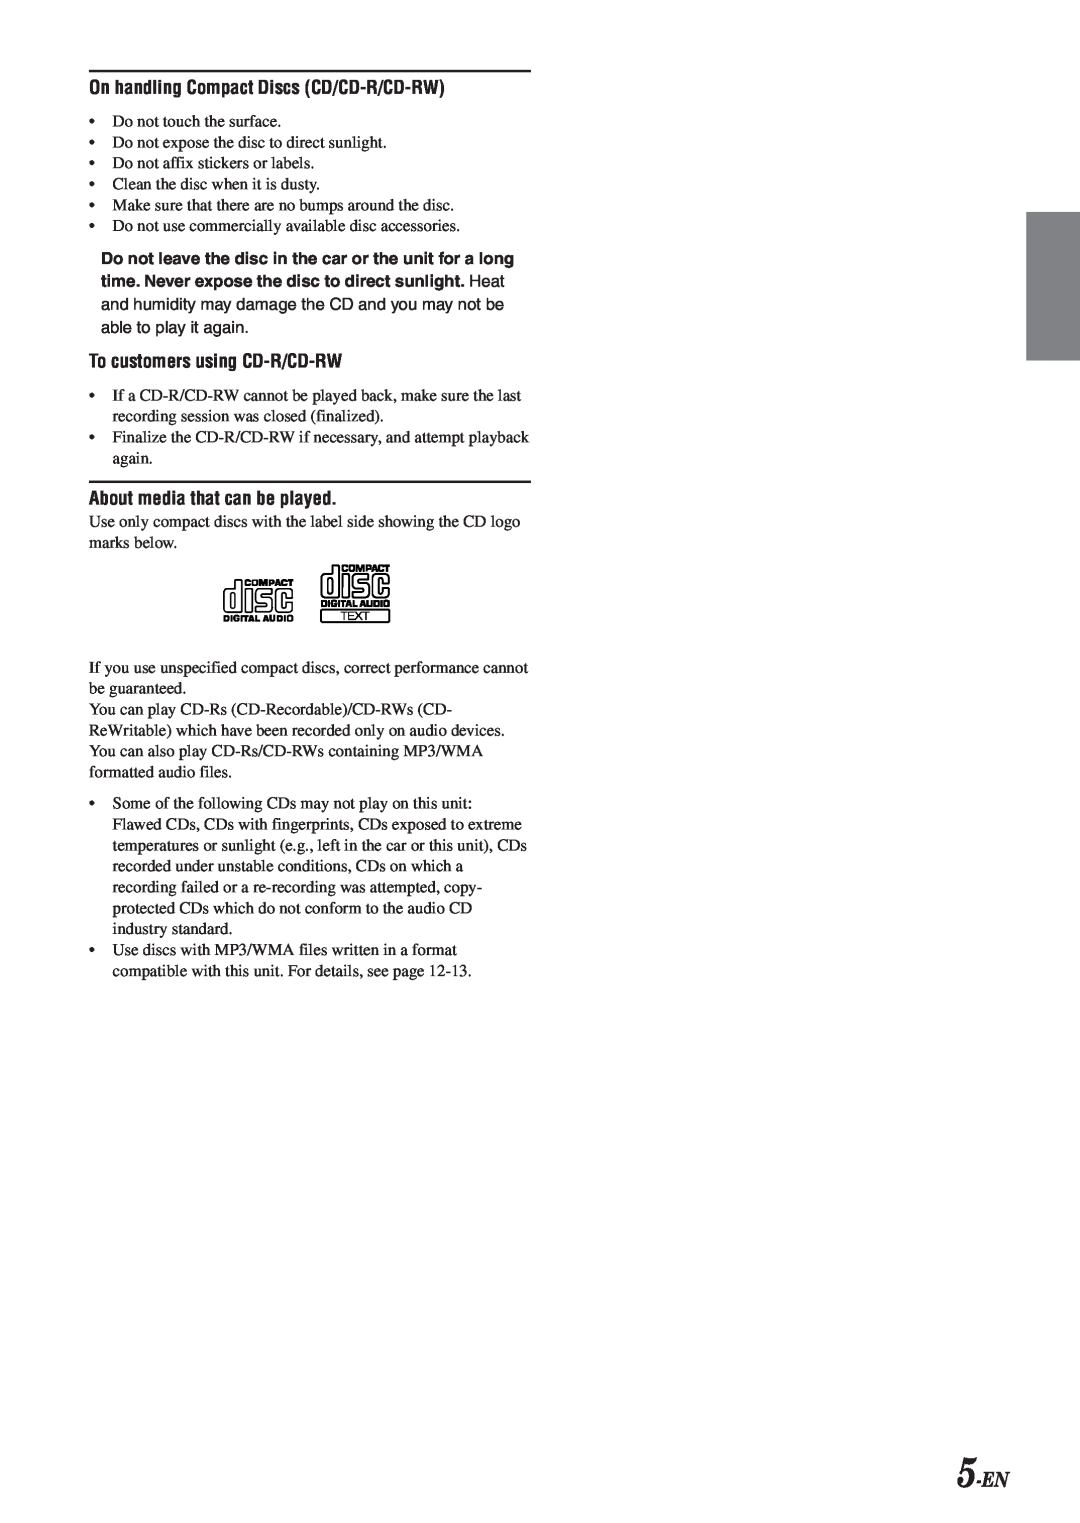 Alpine CDA-9833 owner manual 5-EN, On handling Compact Discs CD/CD-R/CD-RW, To customers using CD-R/CD-RW 